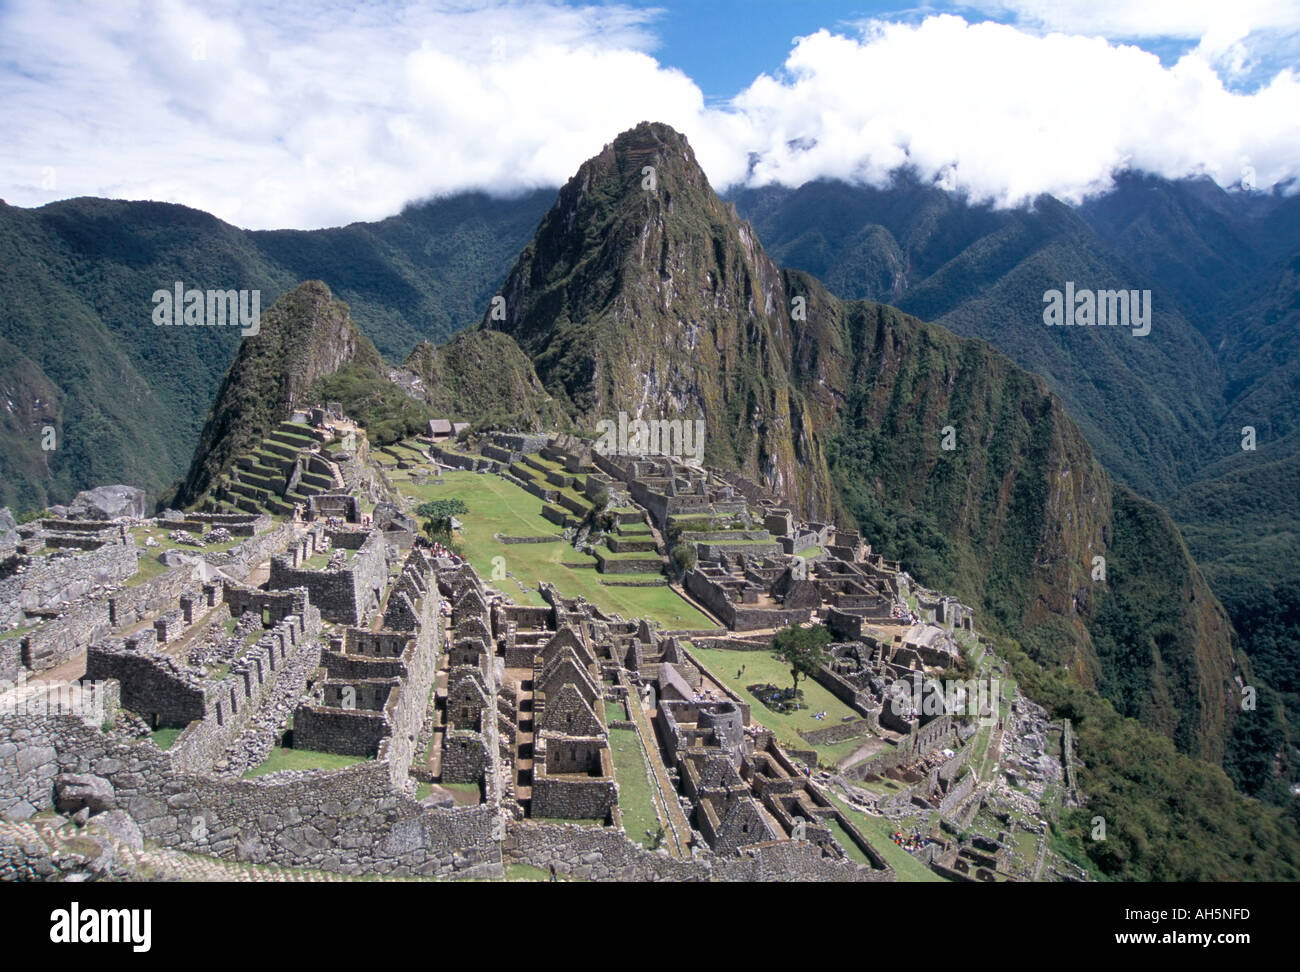 Classic view from Funerary Rock of Inca town site Machu Picchu UNESCO World Heritage Site Peru South America Stock Photo